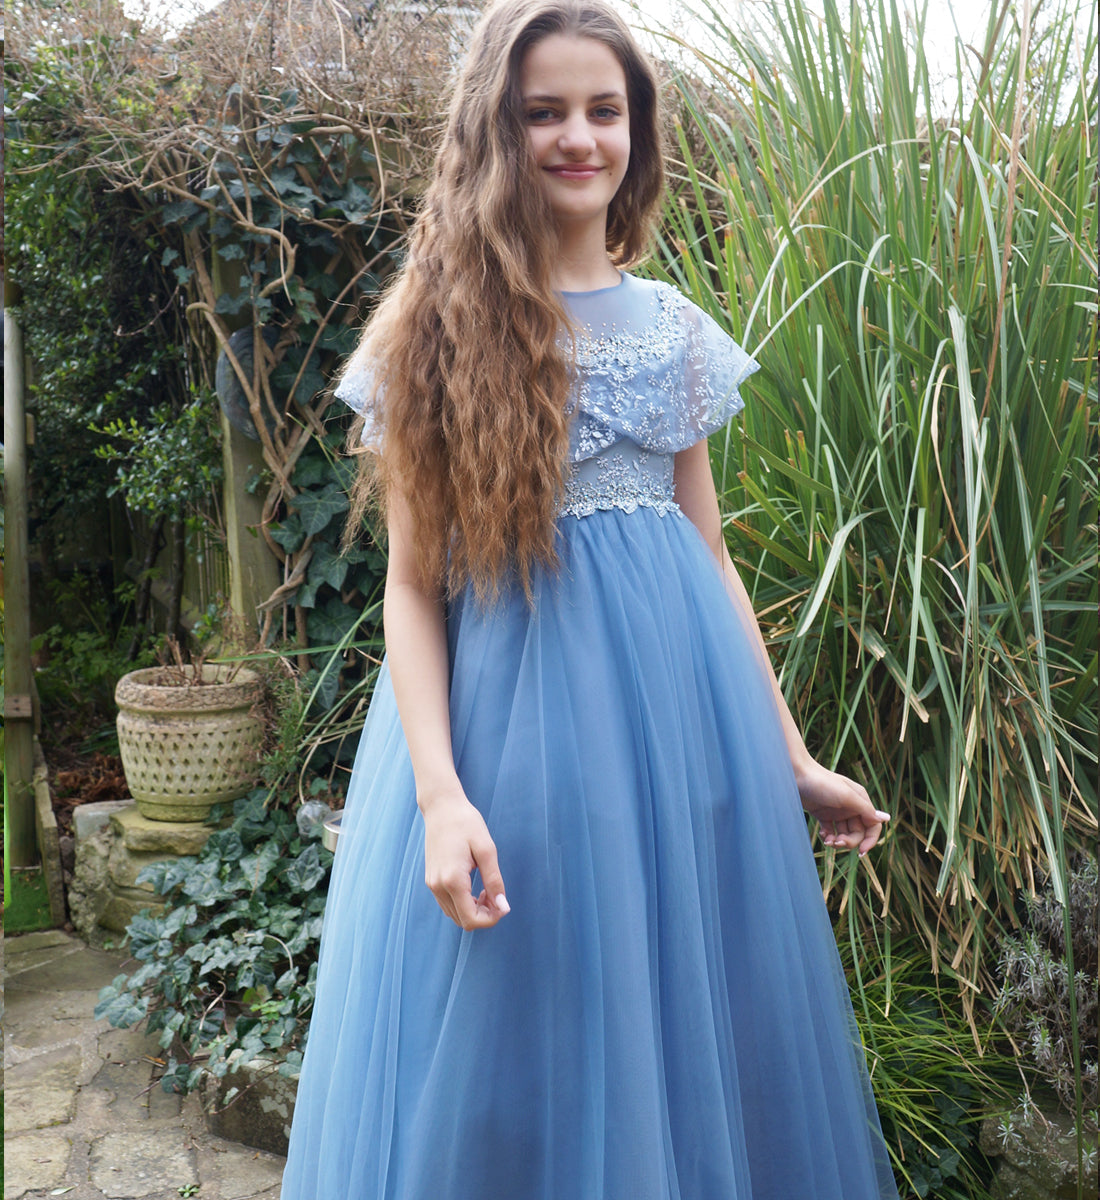 Grace ~ Blue Flower girl or Party Dress